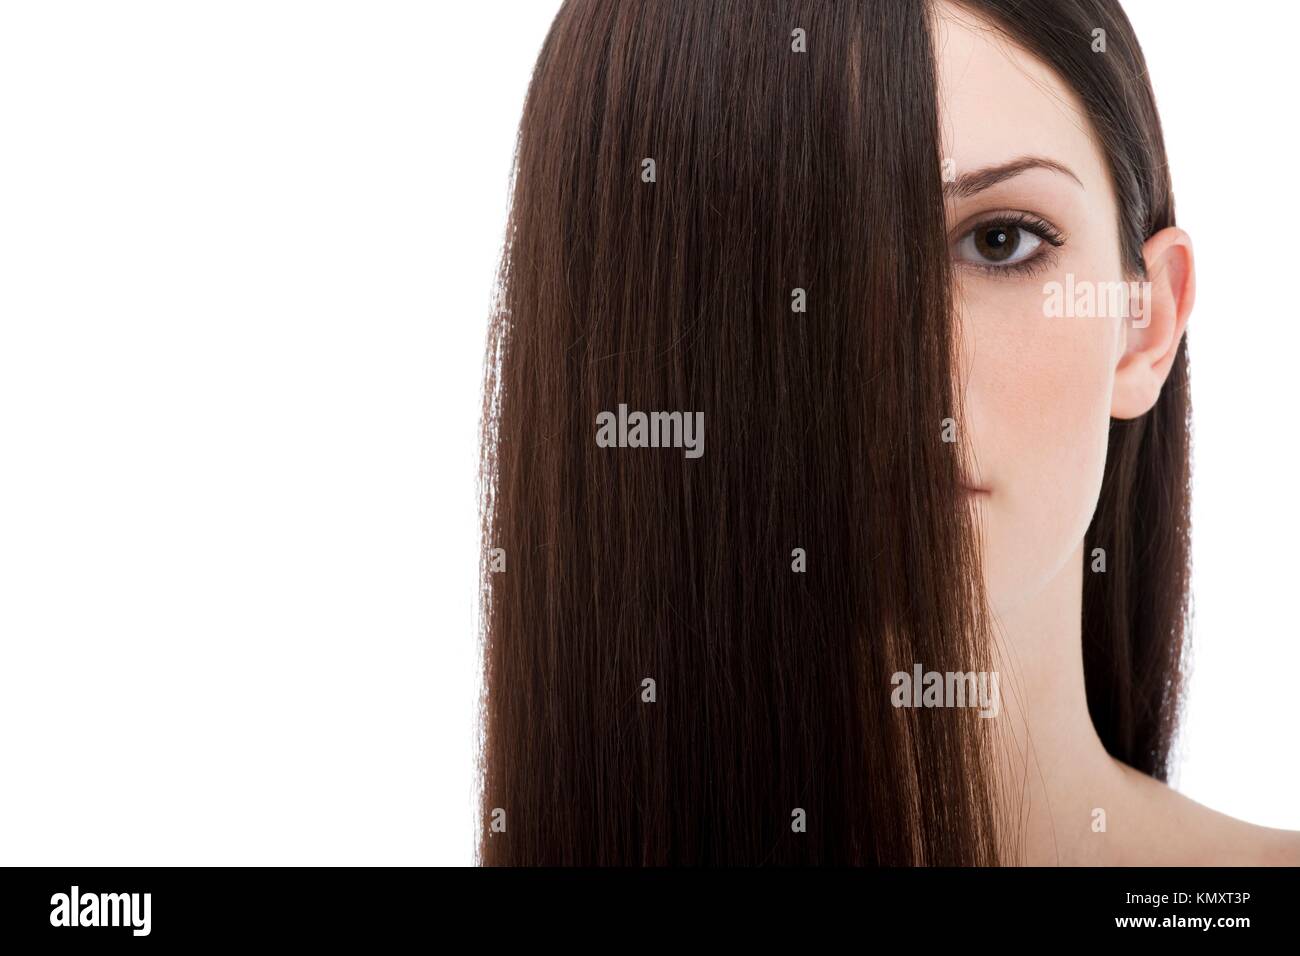 Long beautiful hair covering half face Stock Photo